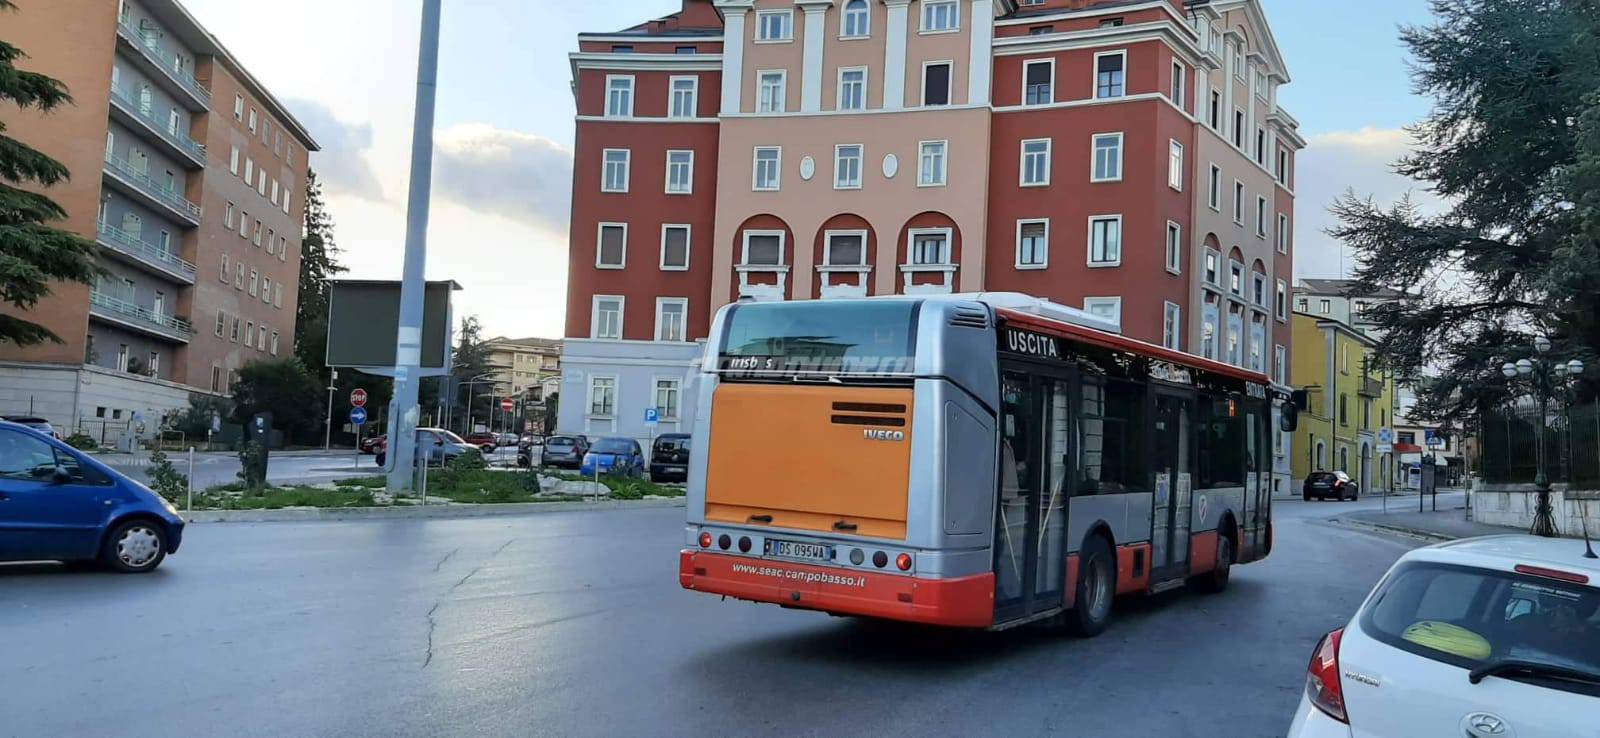 Autobus Seac Campobasso